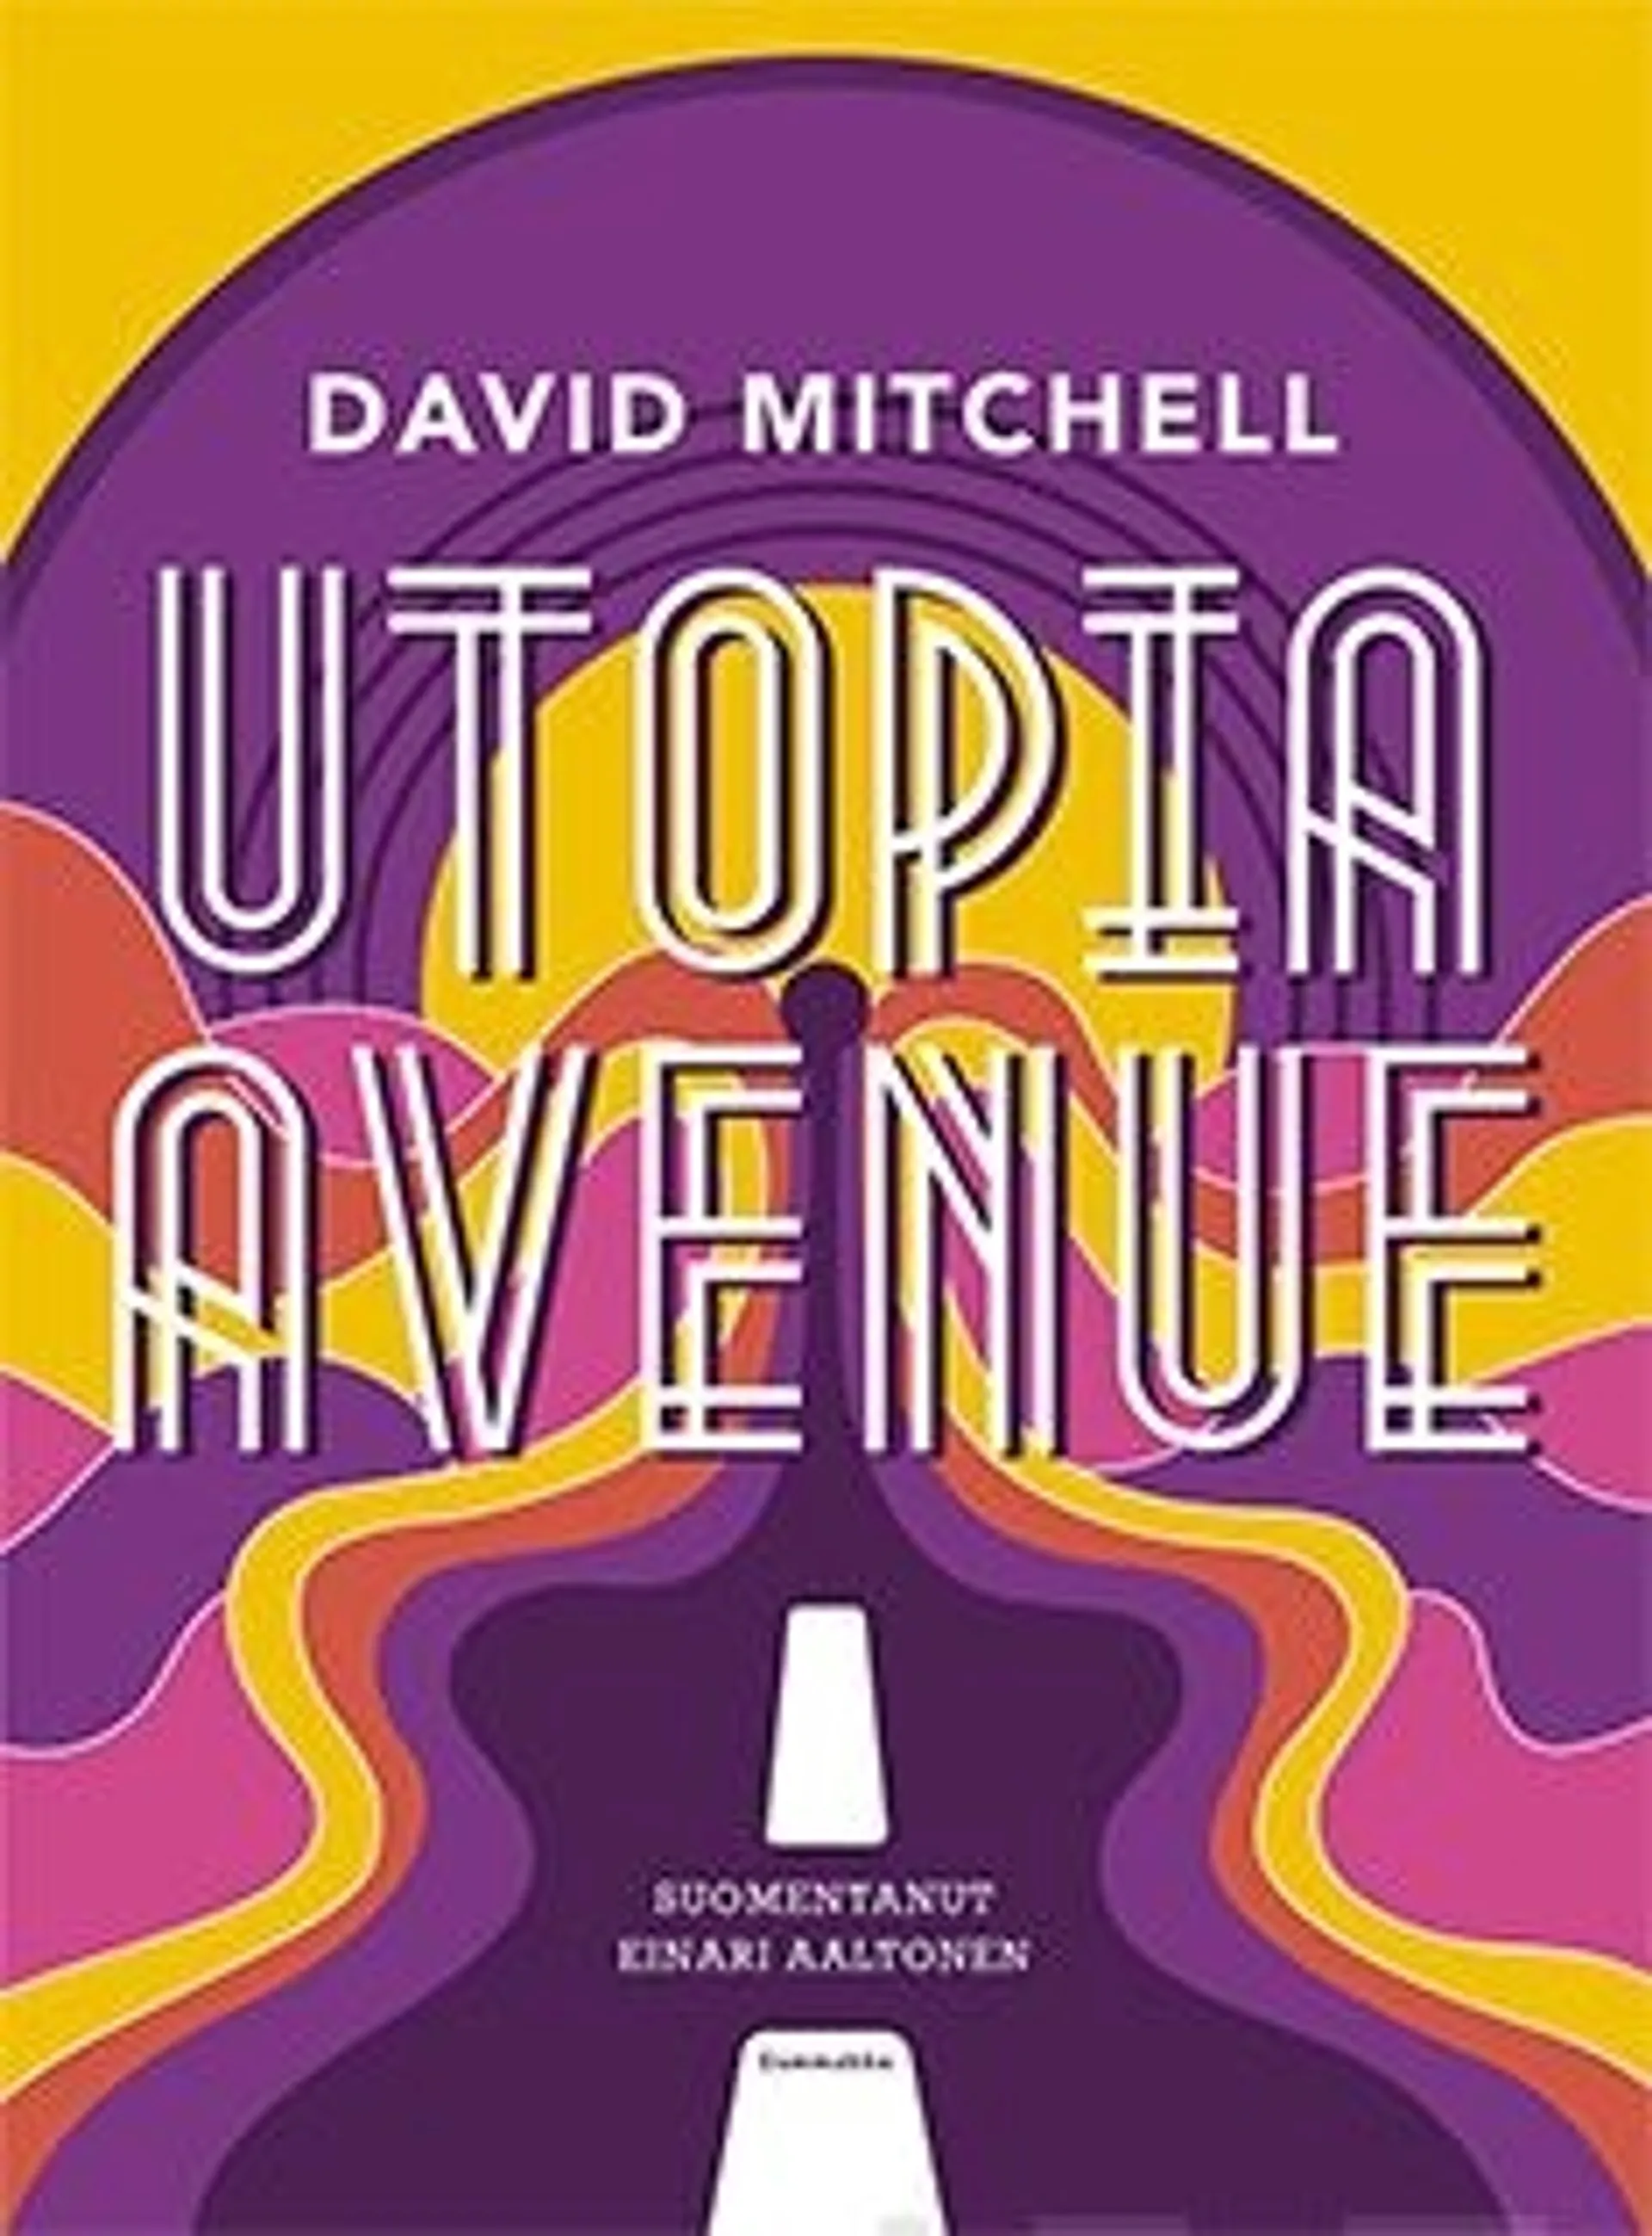 Mitchell, Utopia Avenue